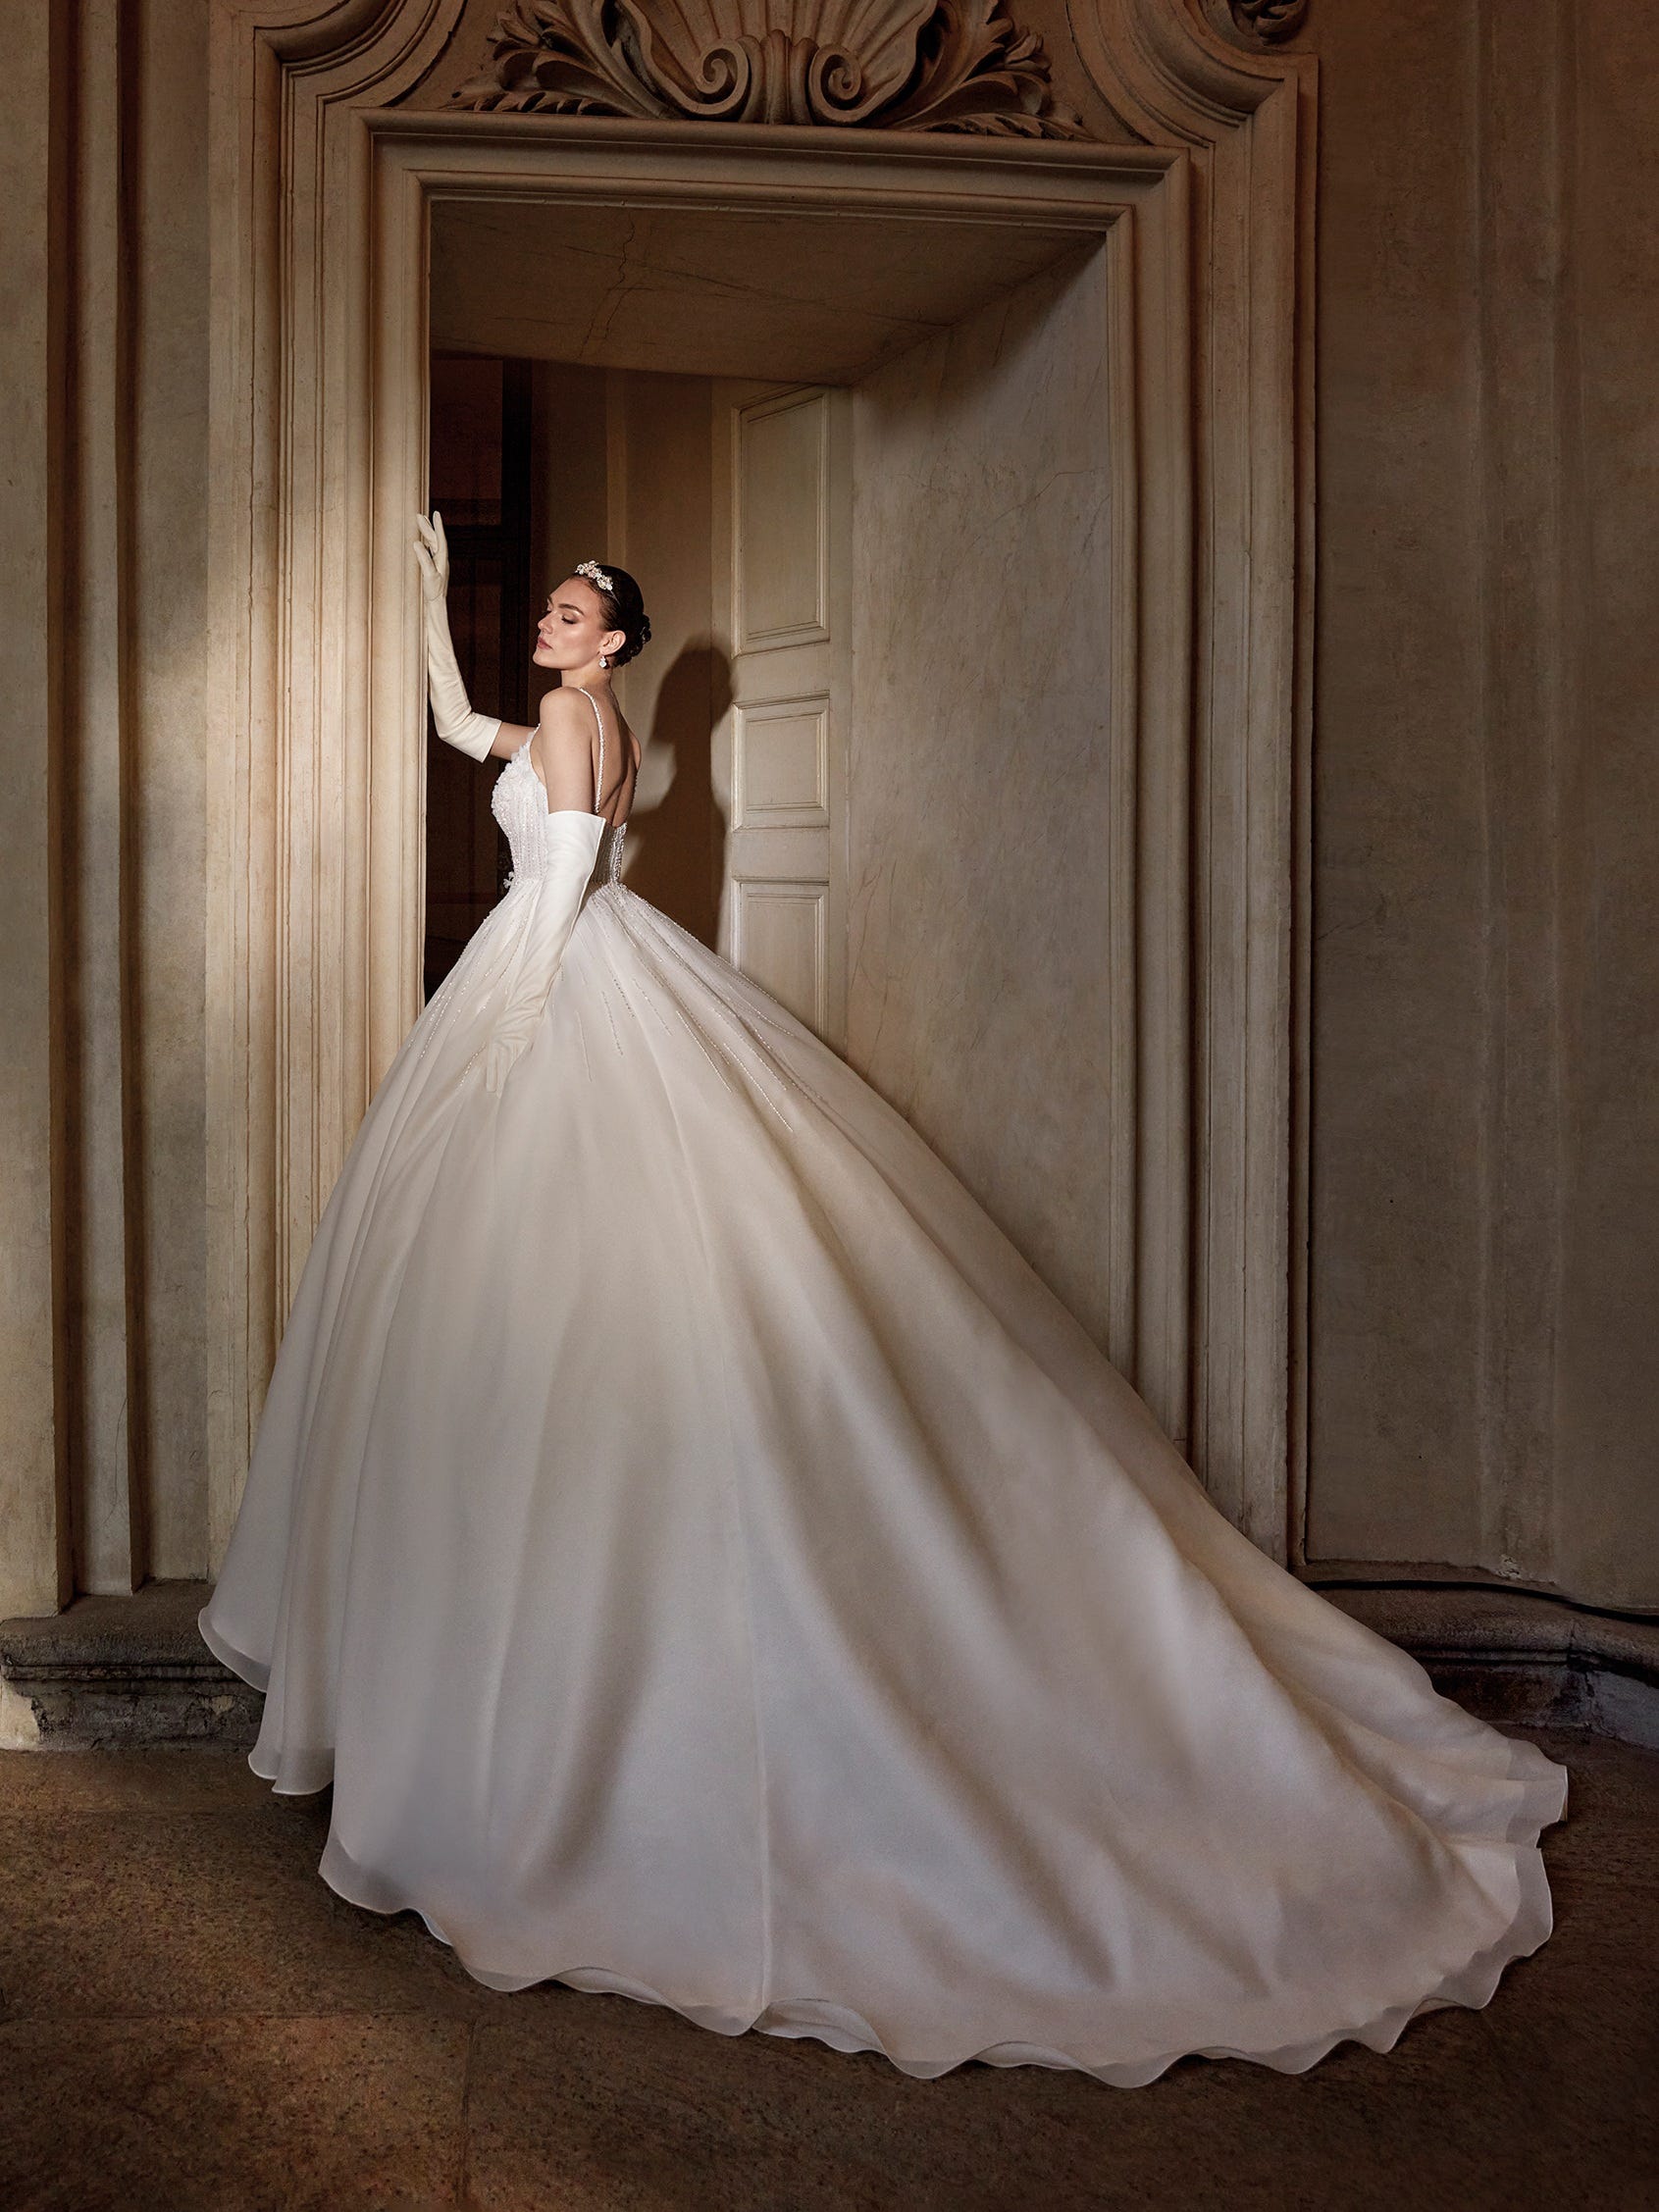 Princess Wedding Dresses, Cinderella, Fairytale | David's Bridal